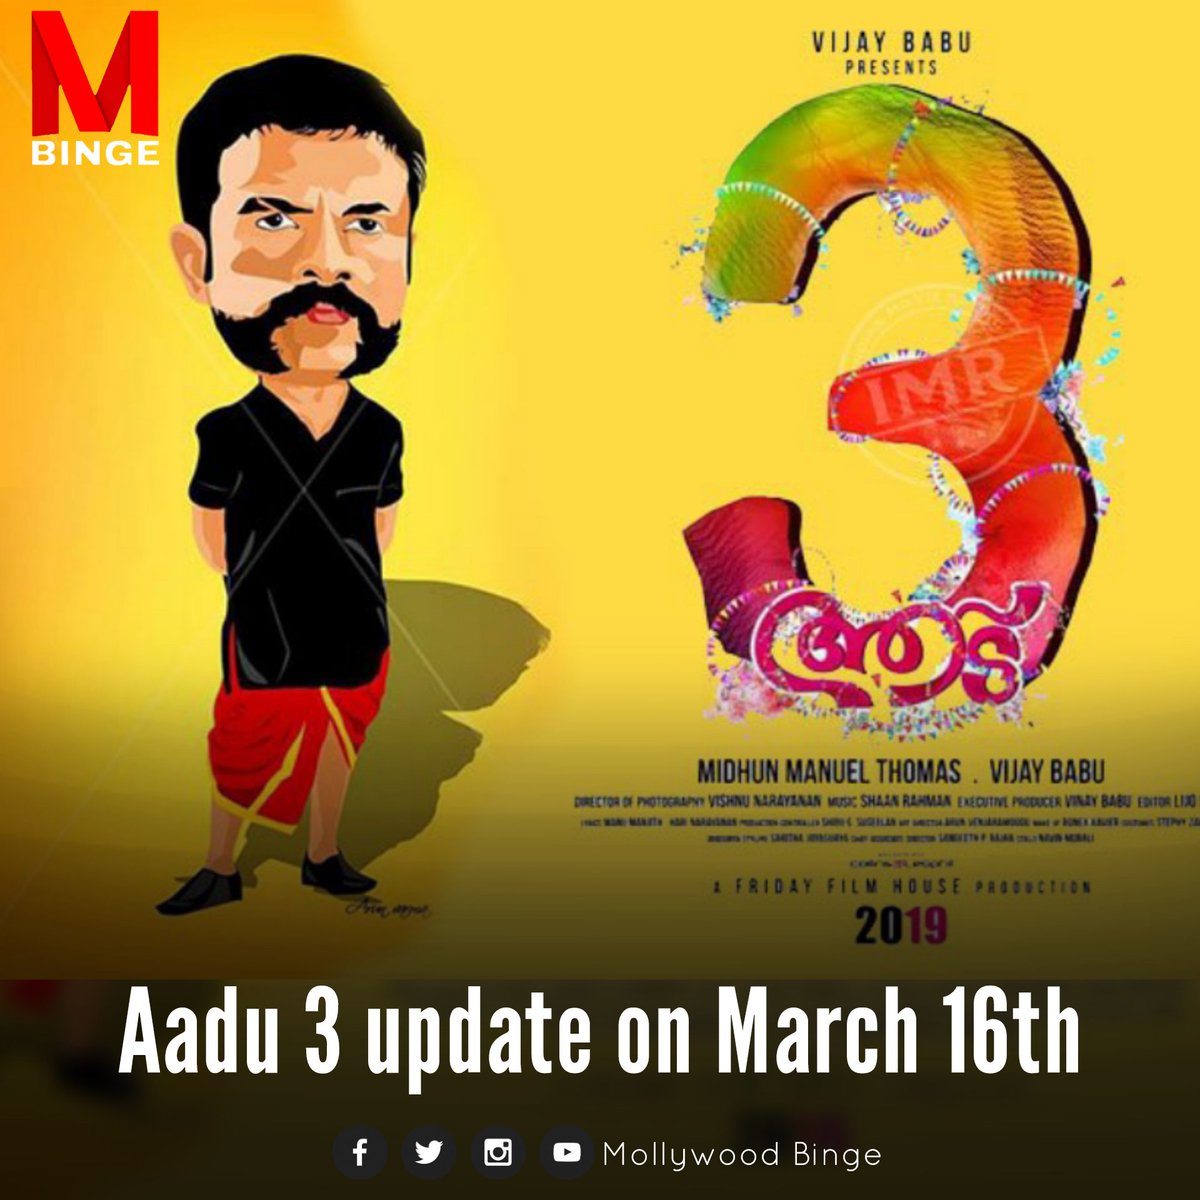 #Aadu3 update on March 16th 

#Jayasuriya  #MidhunManualThomas #VijayBabu